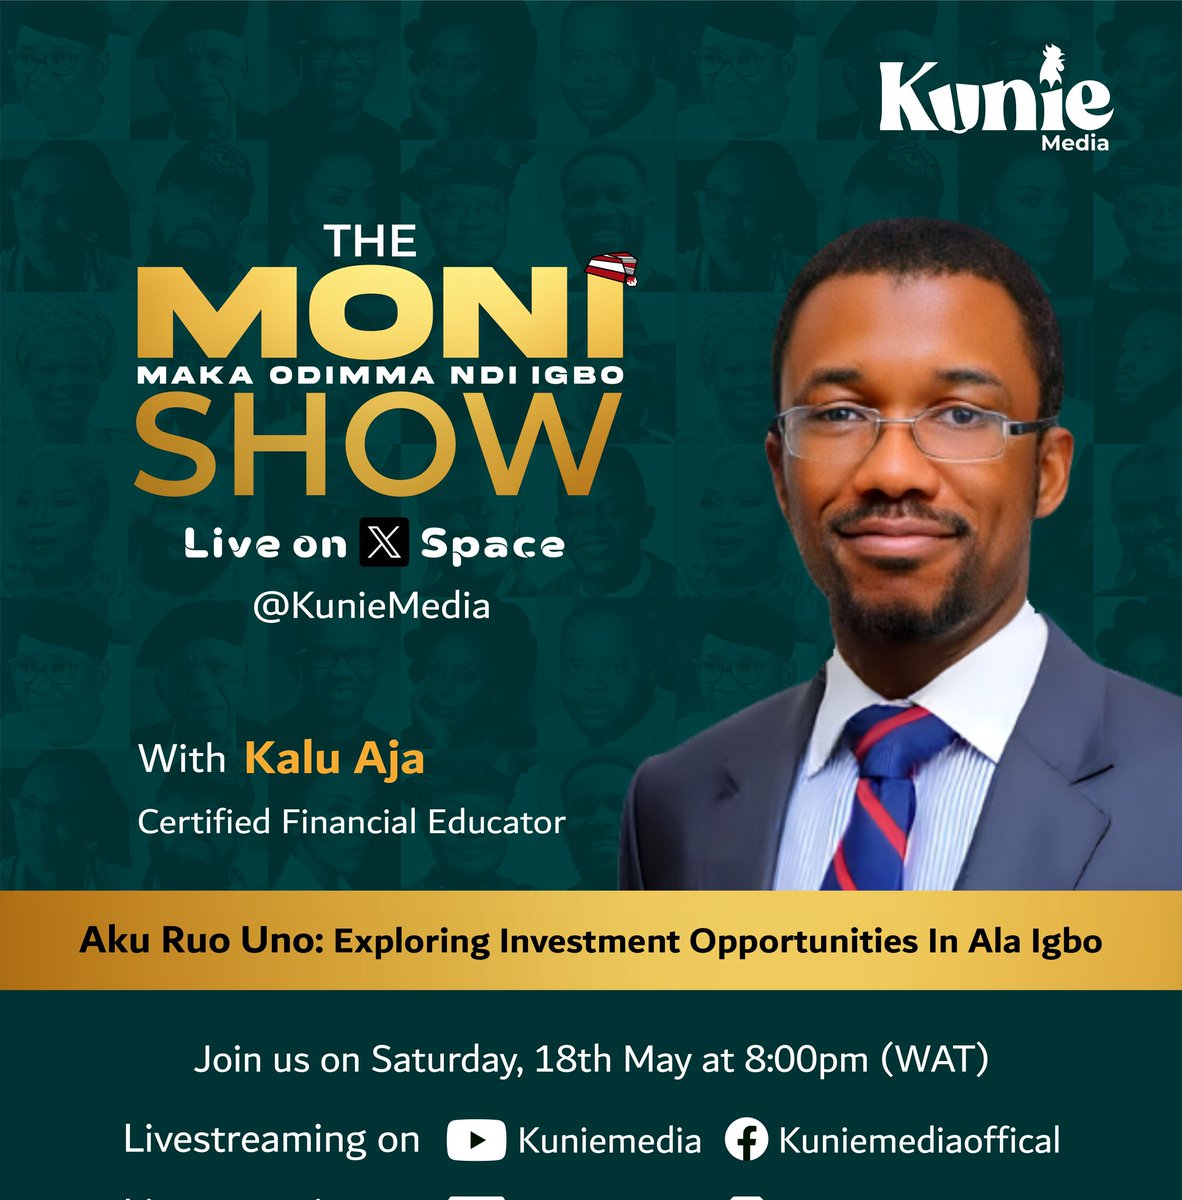 Umu Igbo ndi oma, join us again on The MONI Show on Saturday at 8pm (WAT) as we delve into the 'Aku Ruo Uno' conversation and explore investment opportunities in Ala Igbo with @FinPlanKaluAja2 Oge elugo! Are you ready? Gwakwa umu Igbo ibe gi. #IgboAmaka #TheMONIShow #AkuRuoUno